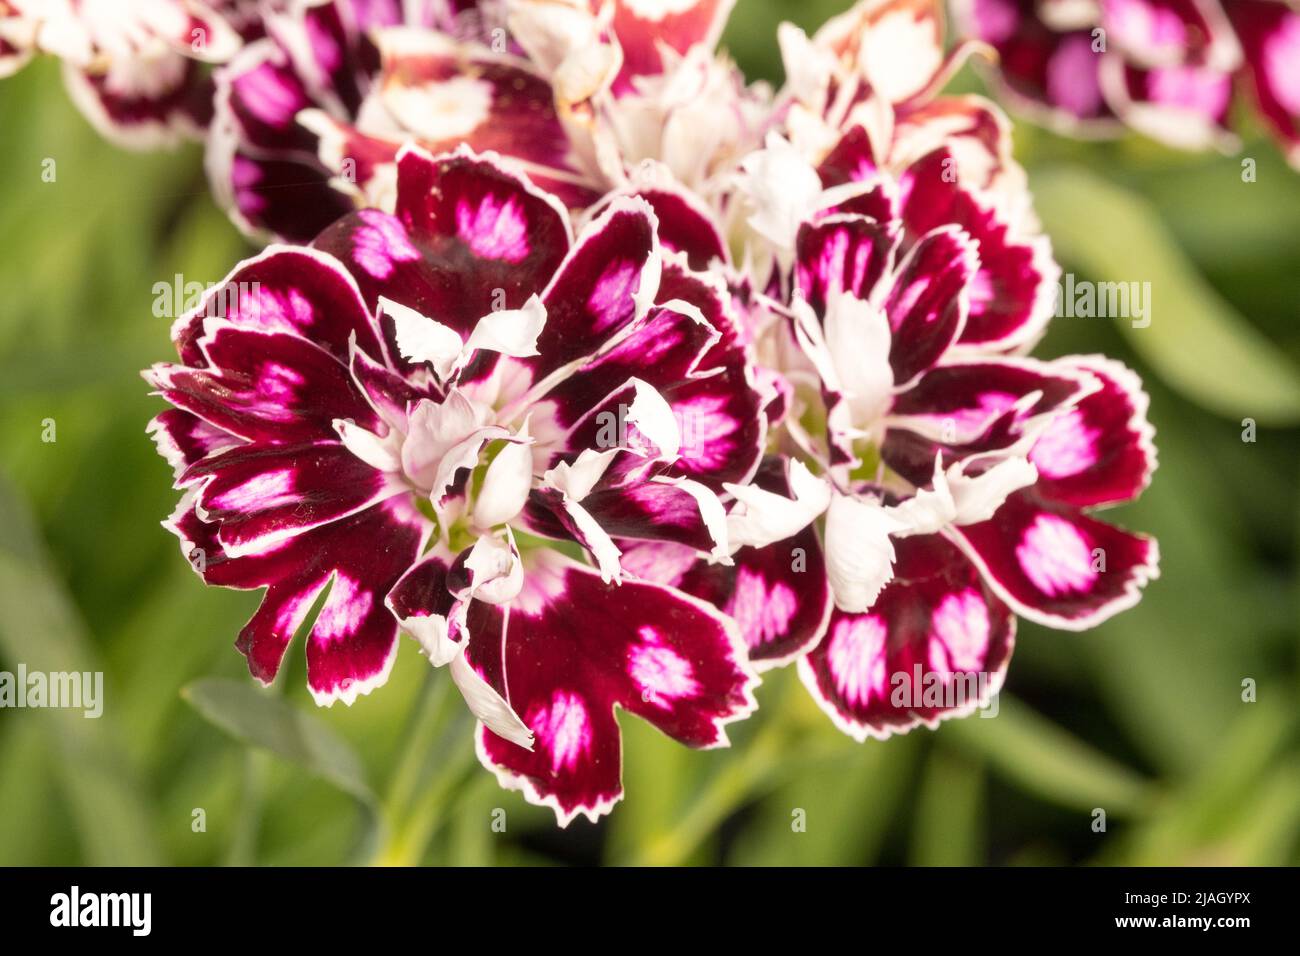 Dianthus caryophyllus, Capitan Calizo, Caryophyllus, Purple, White, Flower, Bloom, Close up, Detail, Blooming Stock Photo